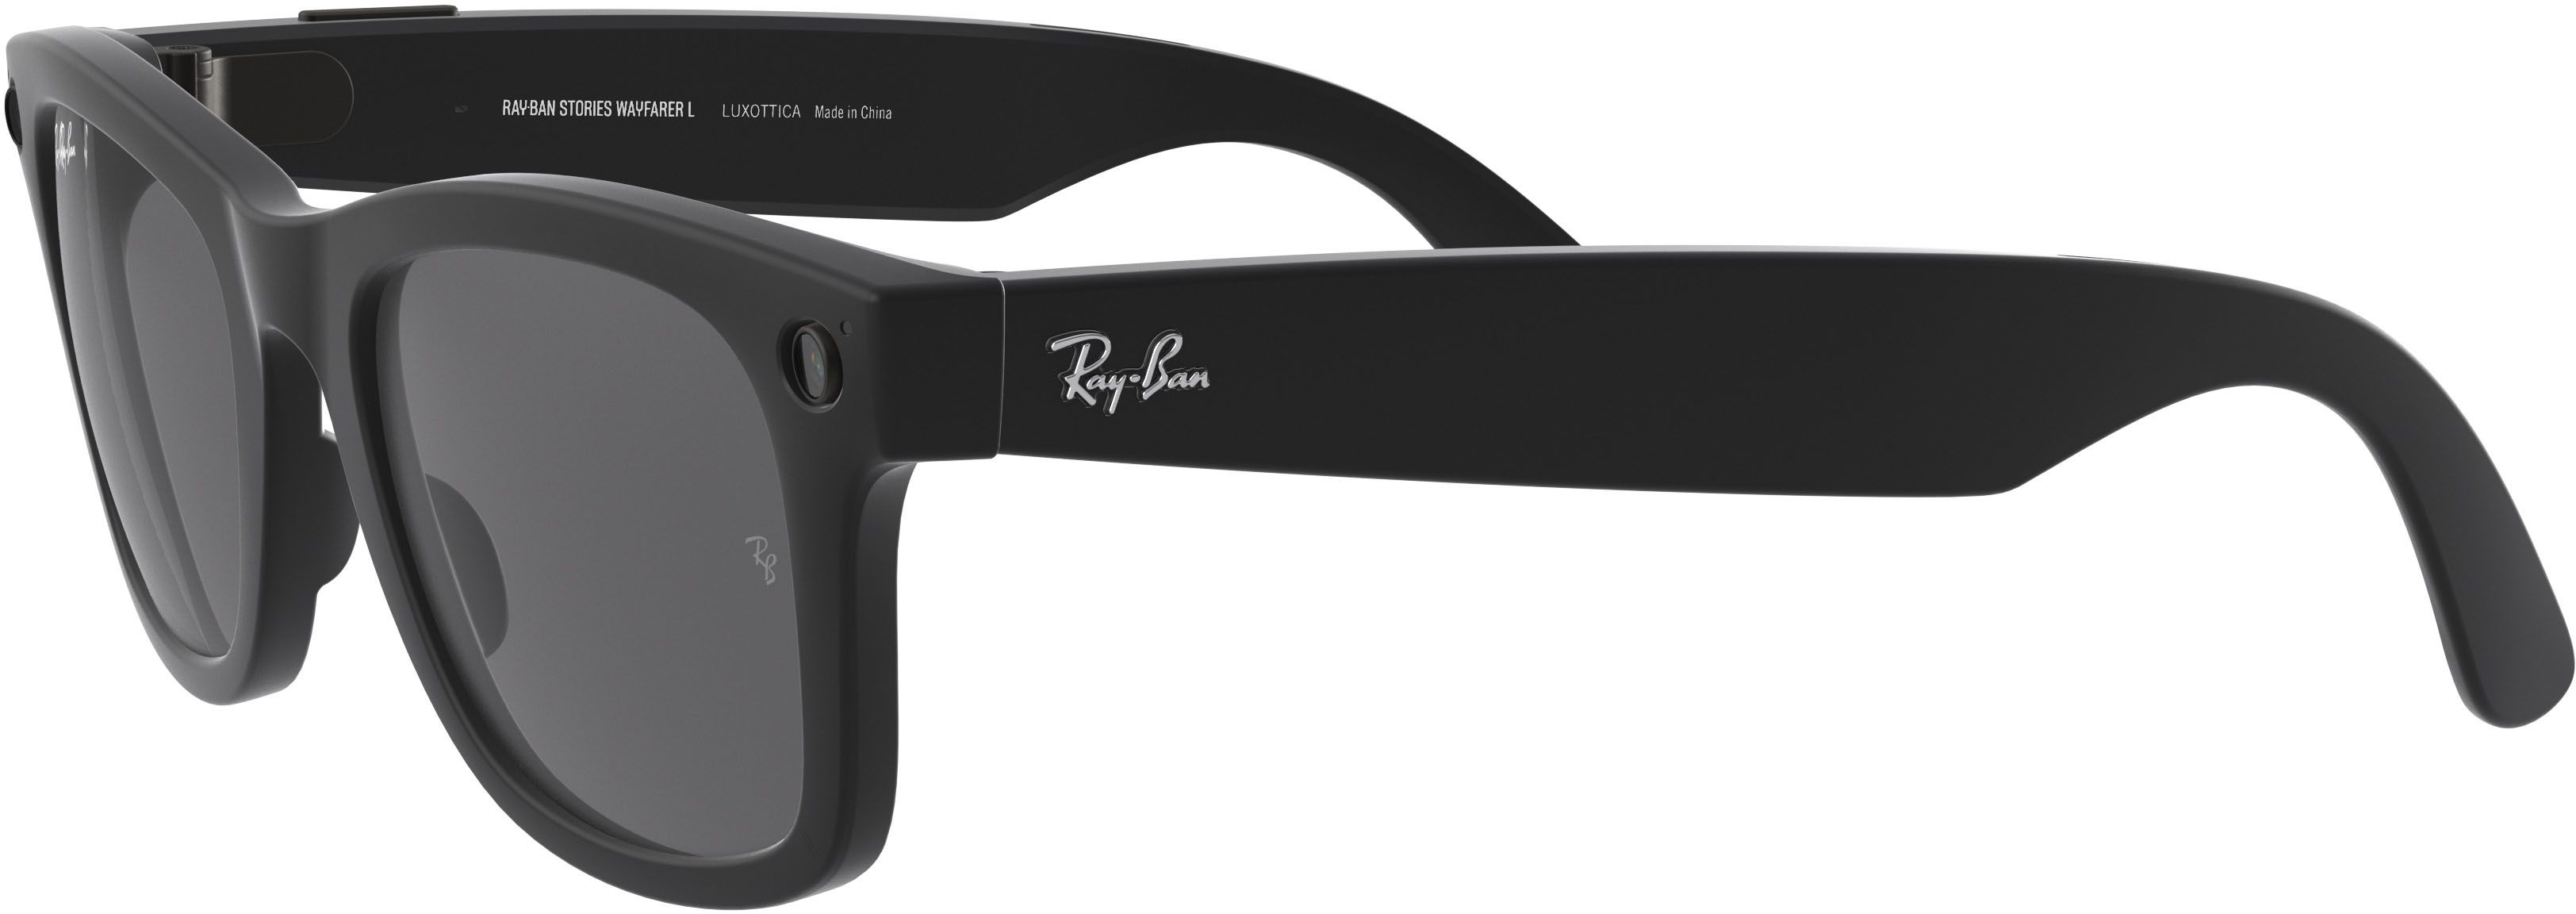 Ray-Ban Stories Wayfarer Smart Glasses 53Mm Matte Black/Dark Grey 0Rw4004601S8753 - Best Buy